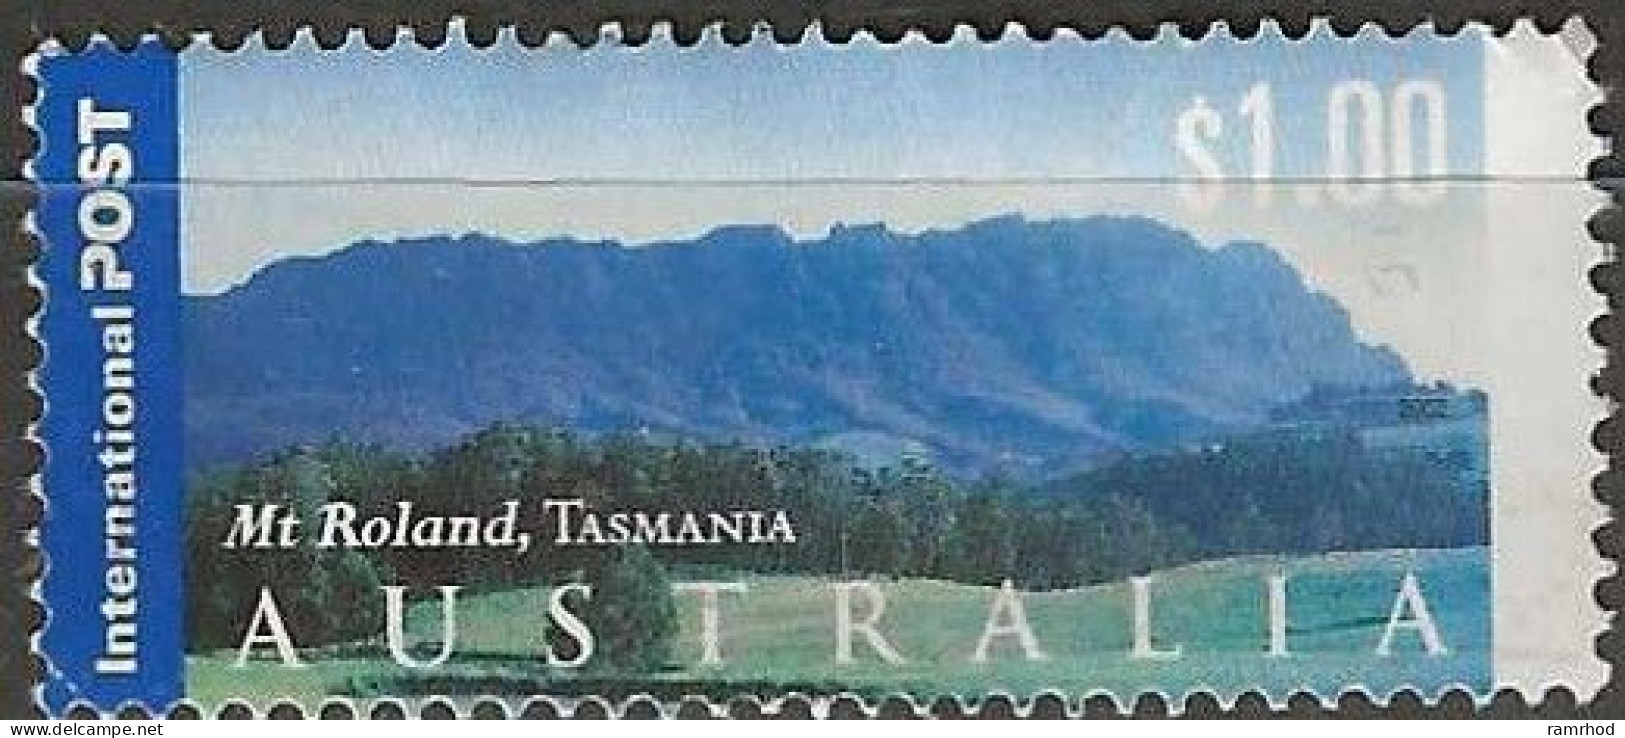 AUSTRALIA 2002 Views Of Australia - $1 - Mt. Roland, Tasmania MNG - Neufs